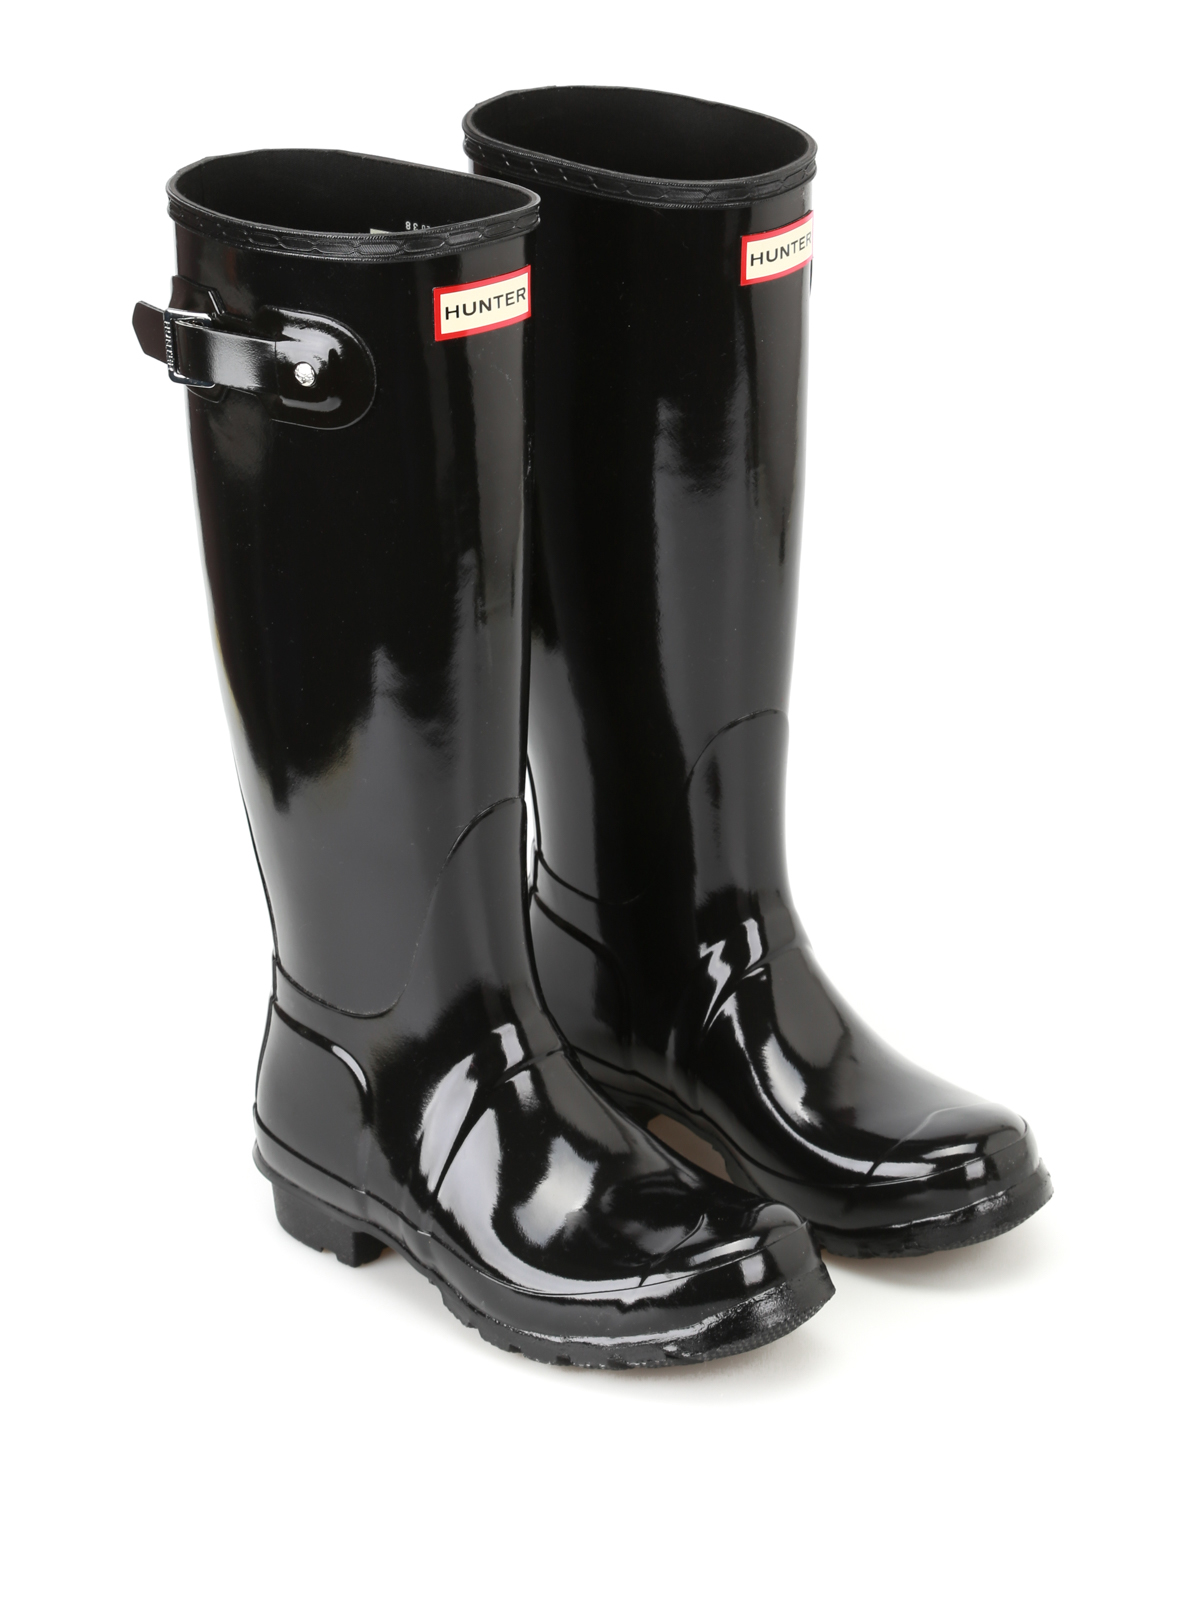 Hunter Original Tall Gloss Ladies Black Boots 9 eBay